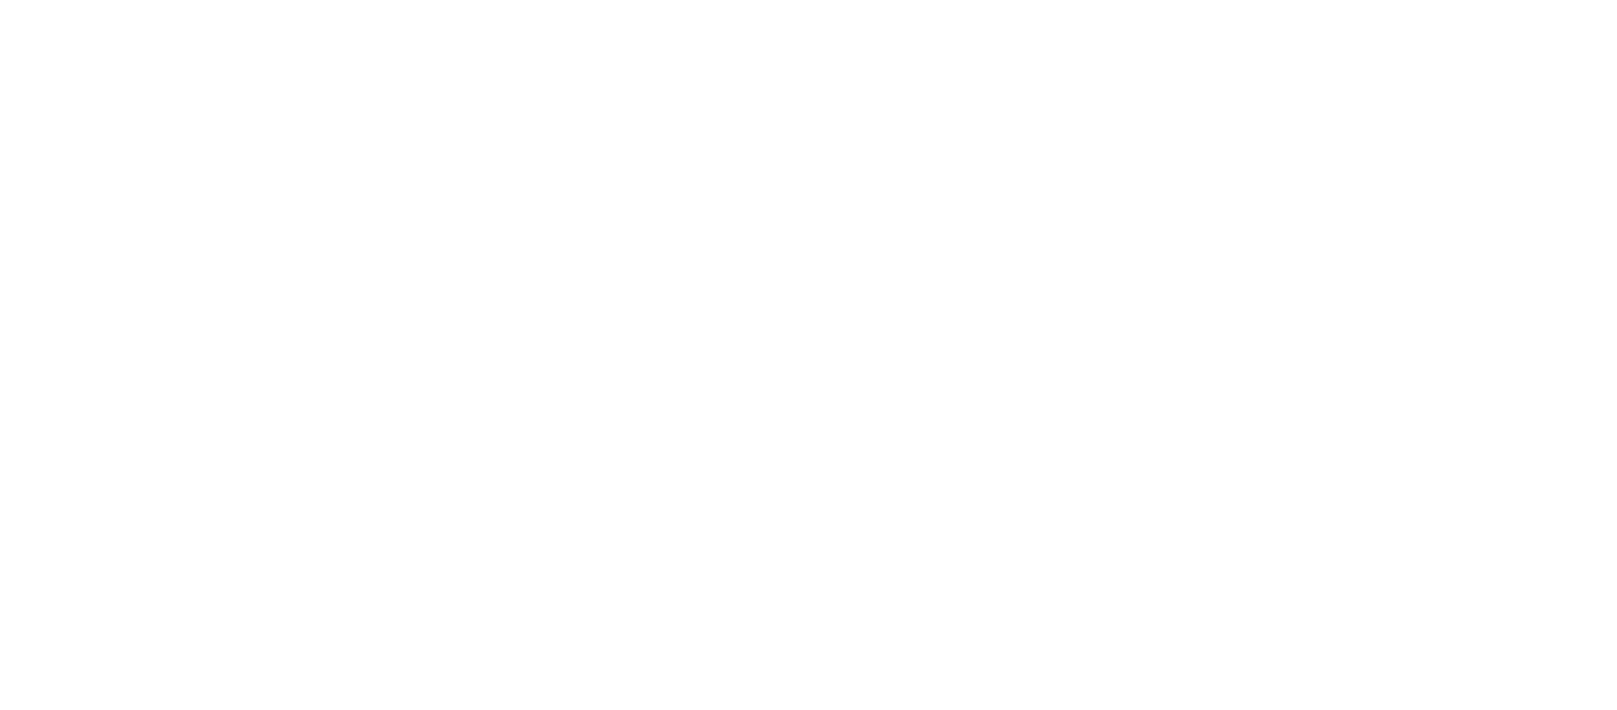 Delaware Arts Alliance logo